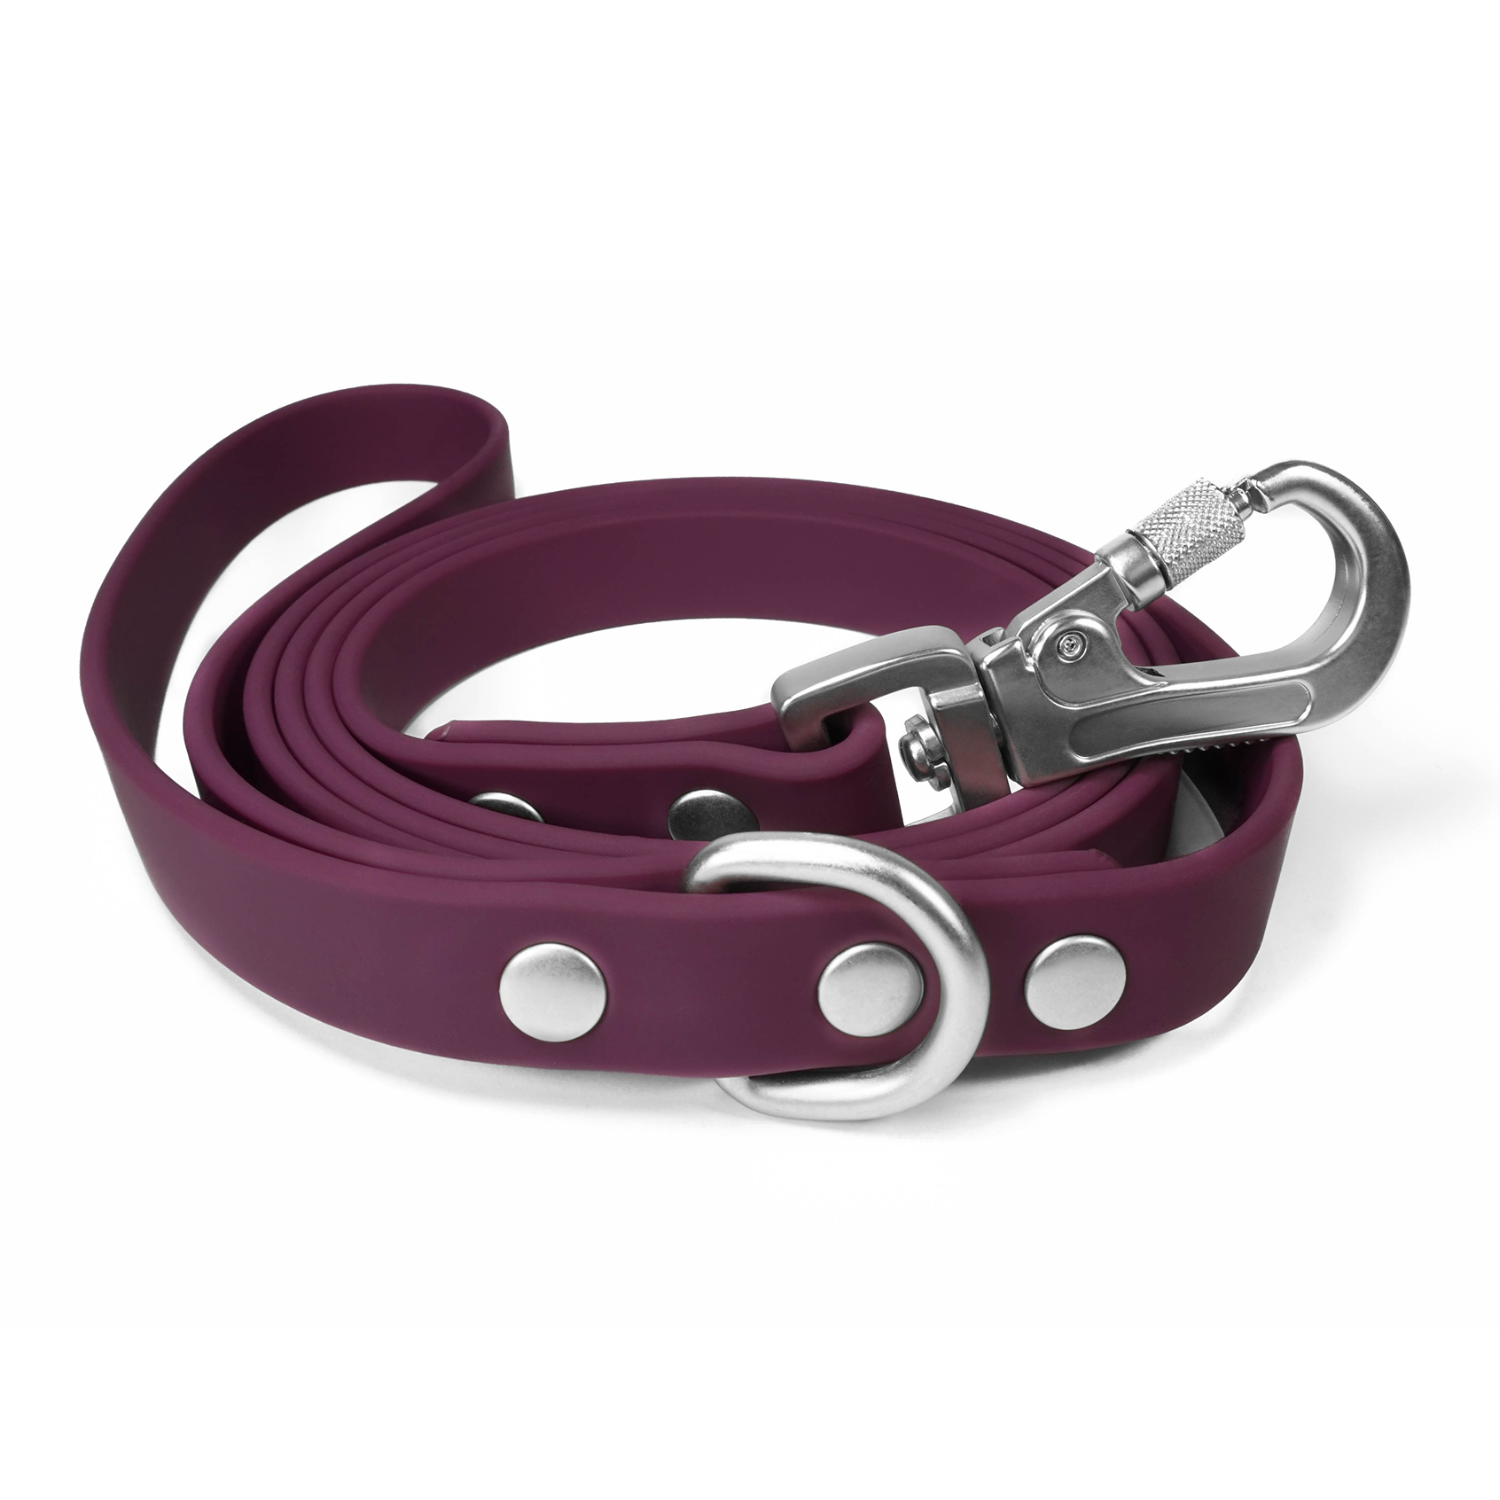 Django Adventure Dog Harness in Plum Purple -  Small